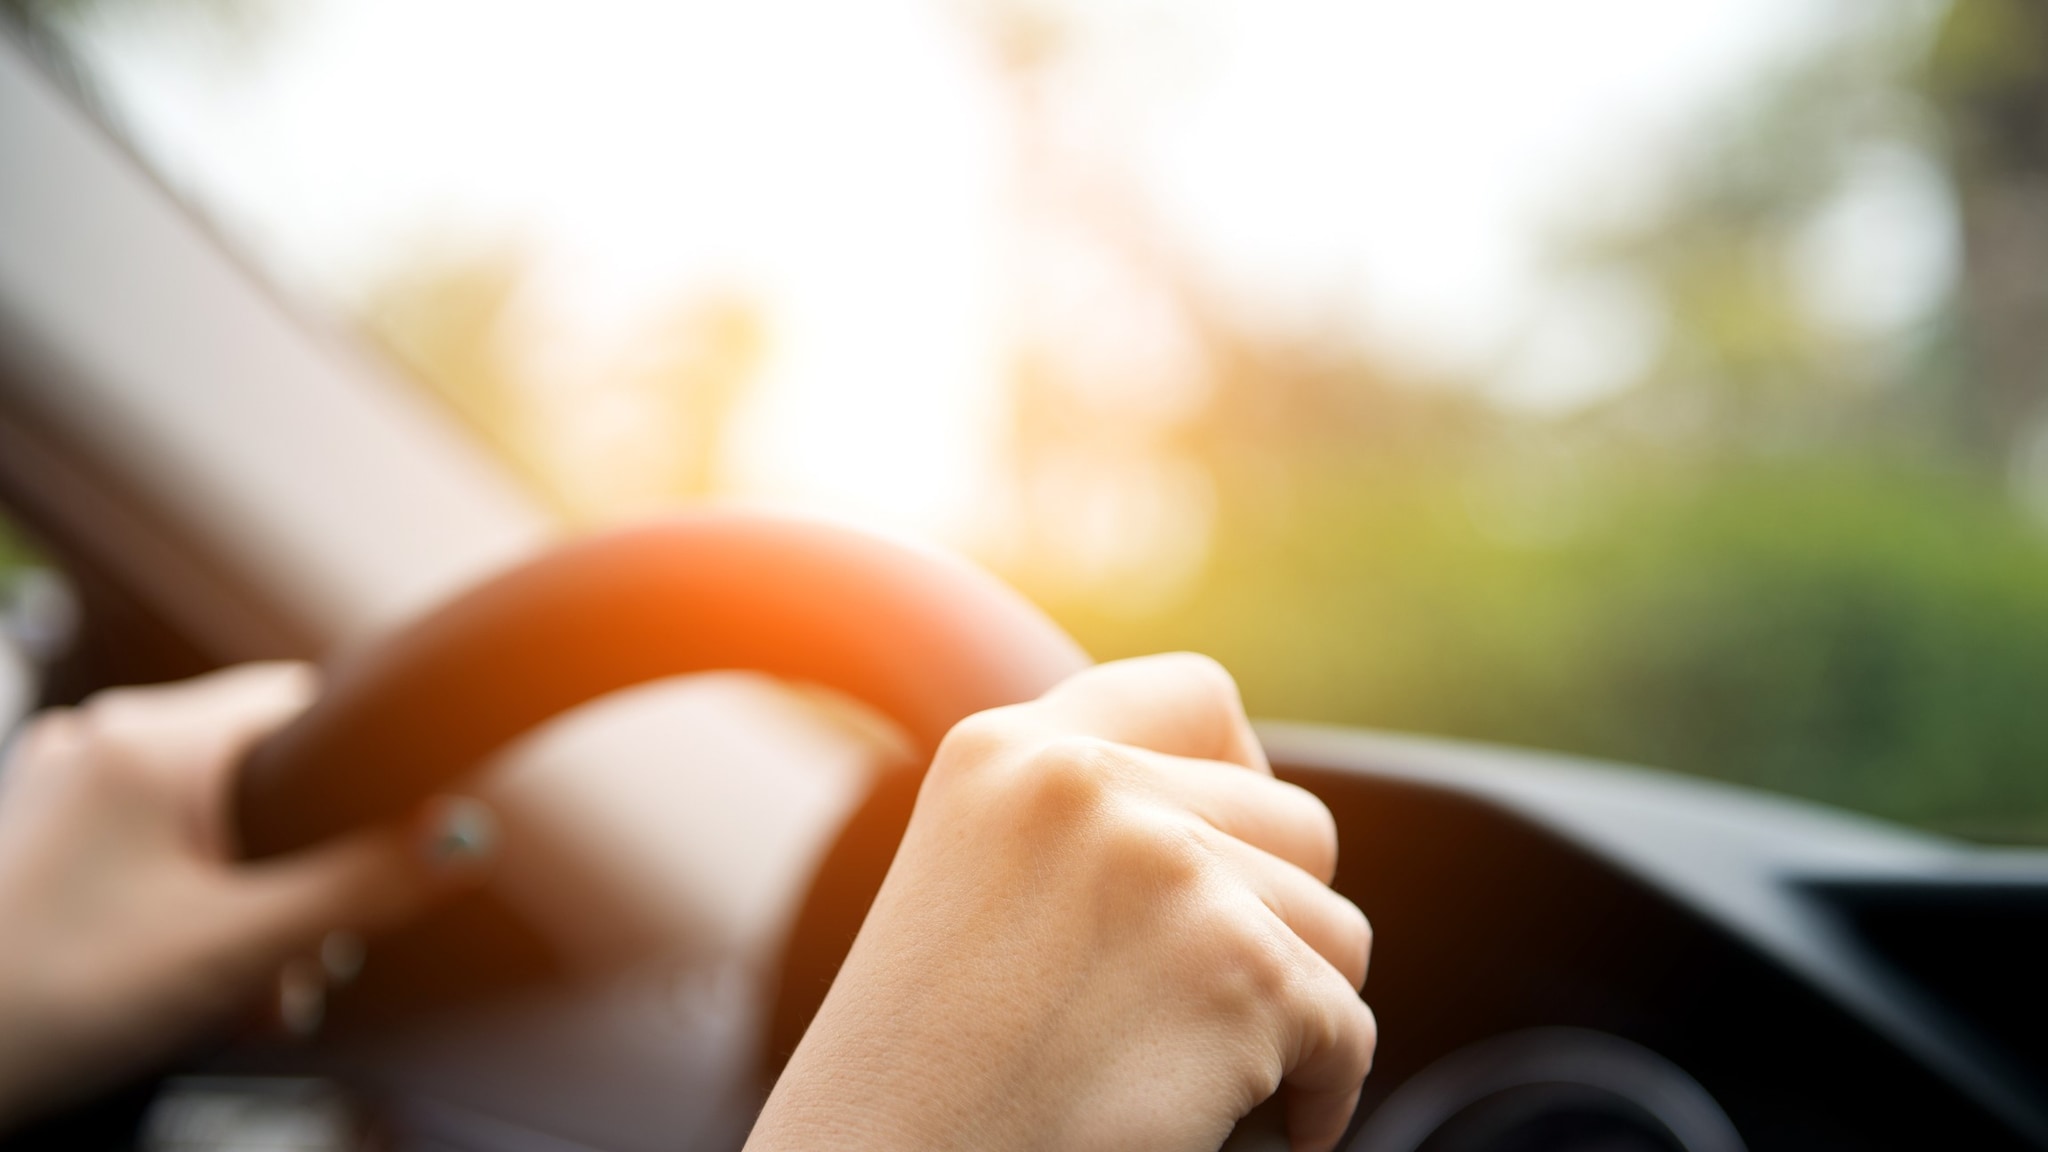 Driver hands on steering wheel